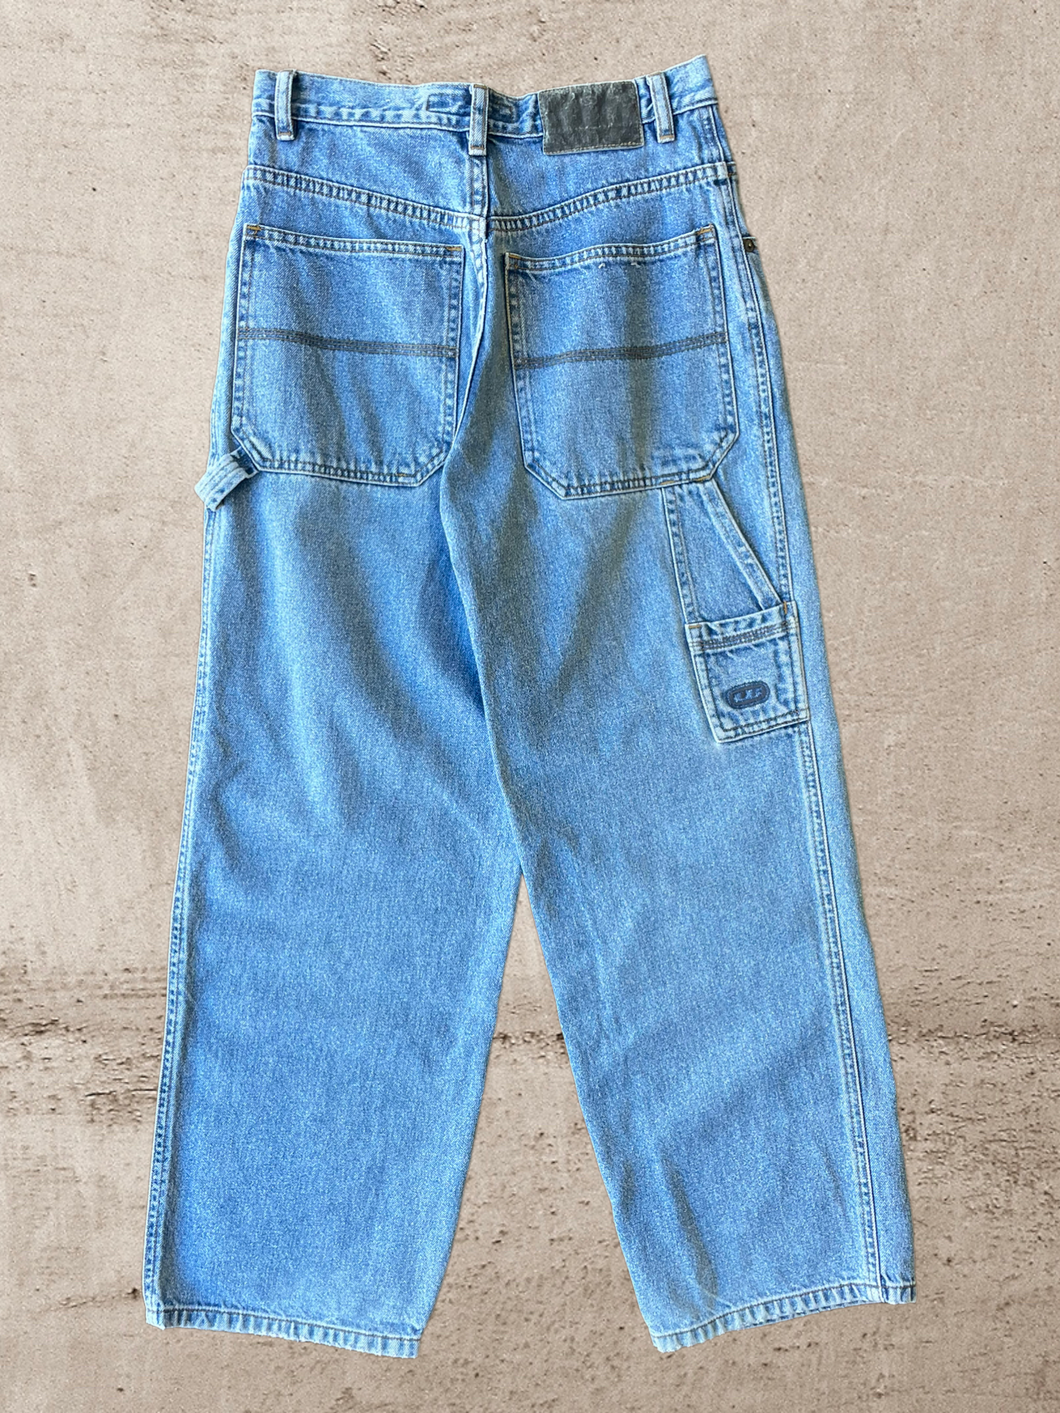 90s Baggy Carpenter Utility Jeans -28x27